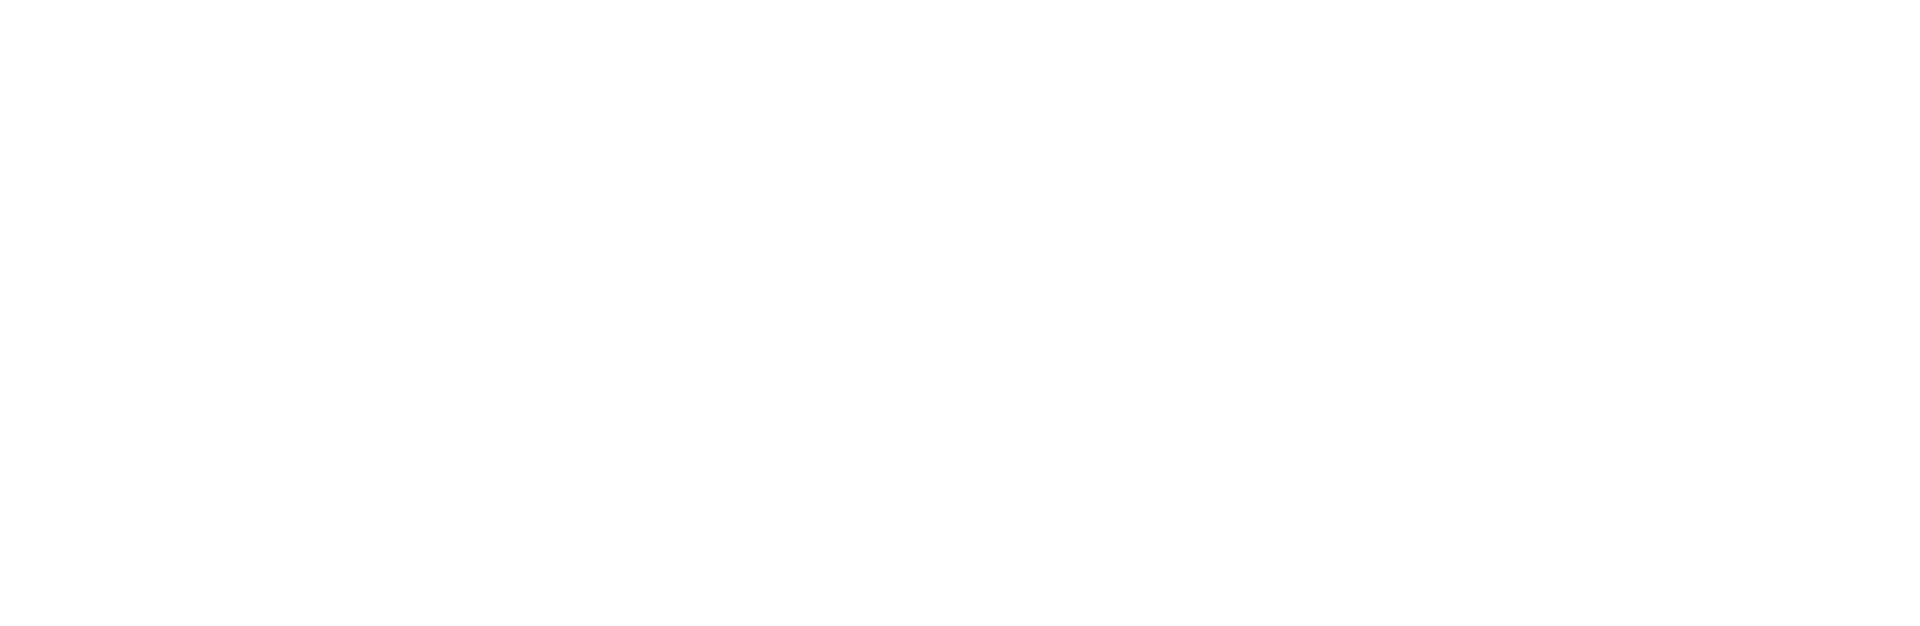 Gesche Funeral Home & Cremation Service Logo